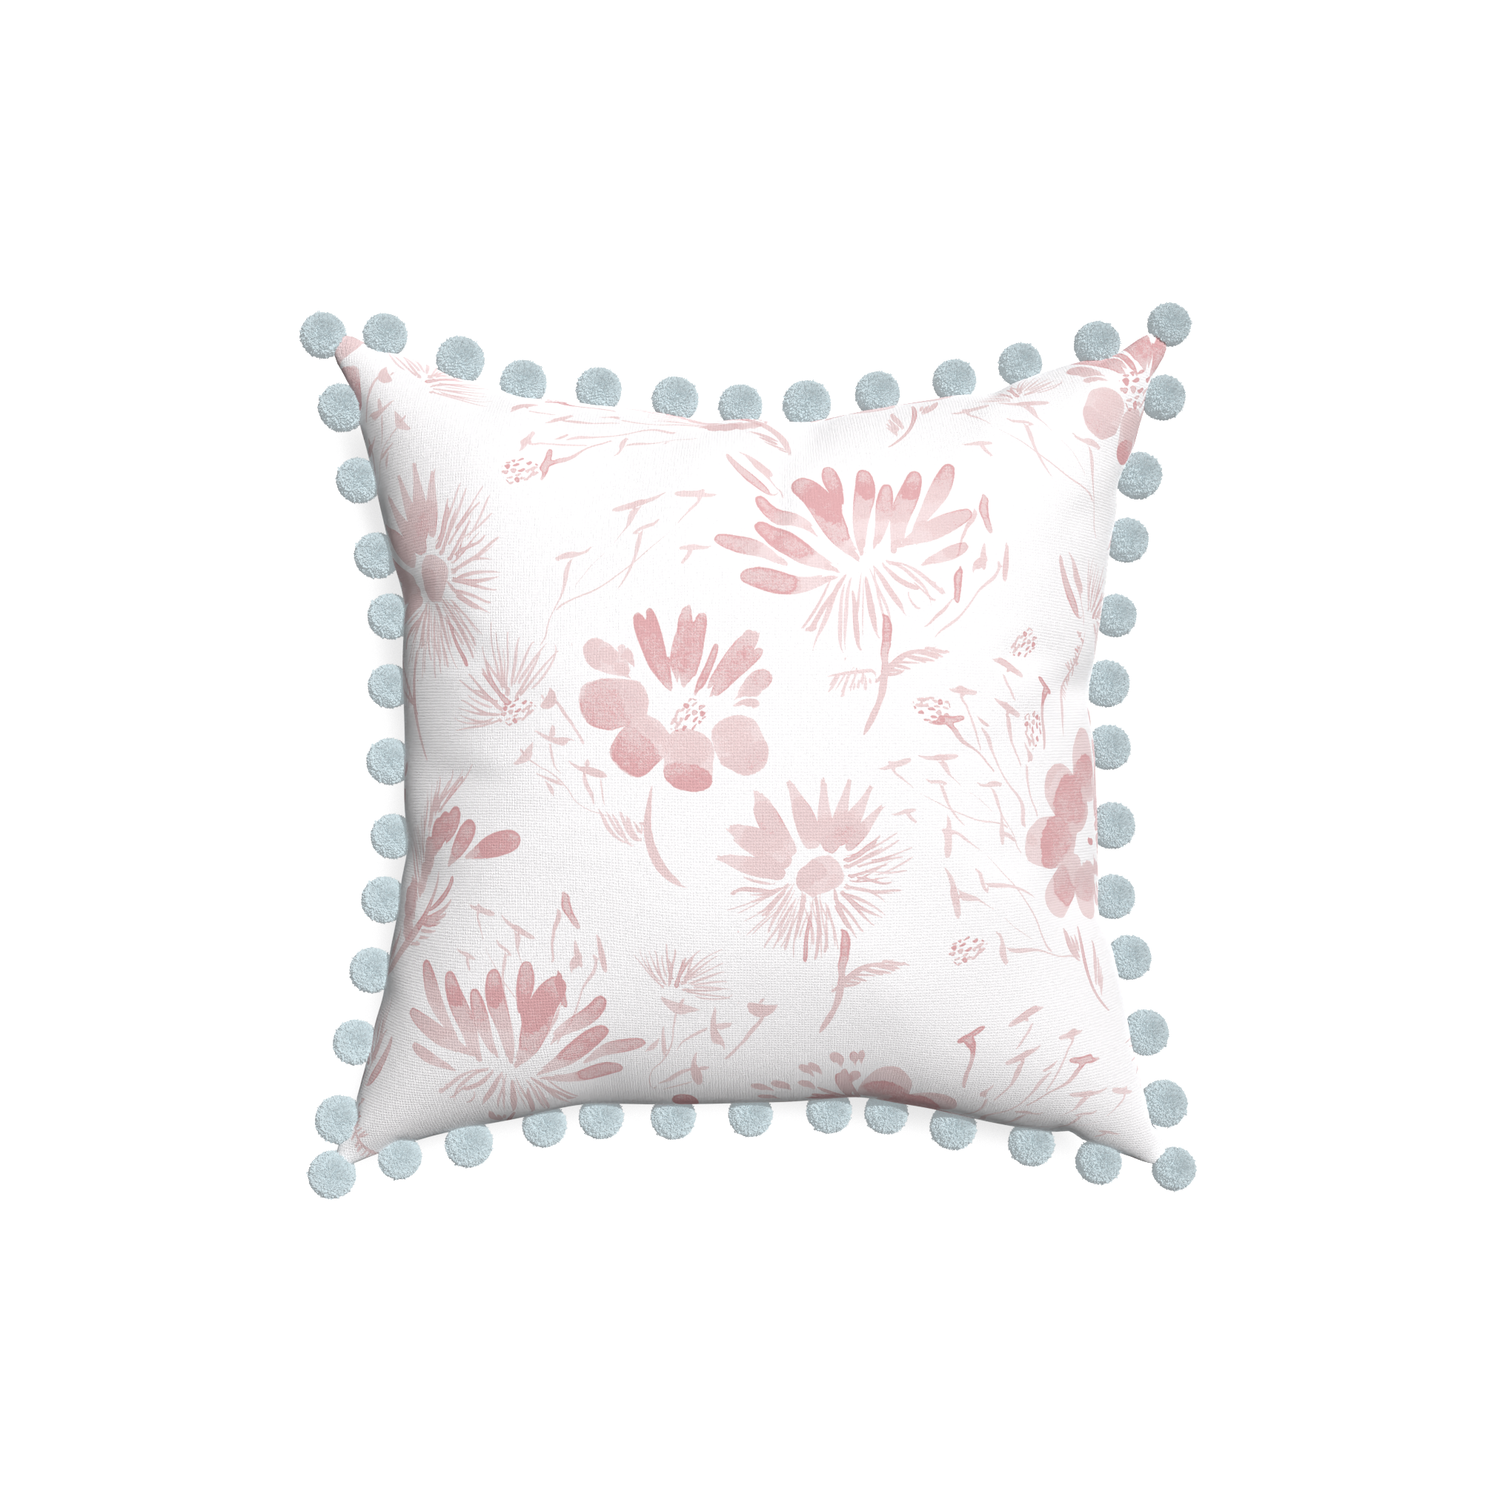 18-square blake custom pink floralpillow with powder pom pom on white background